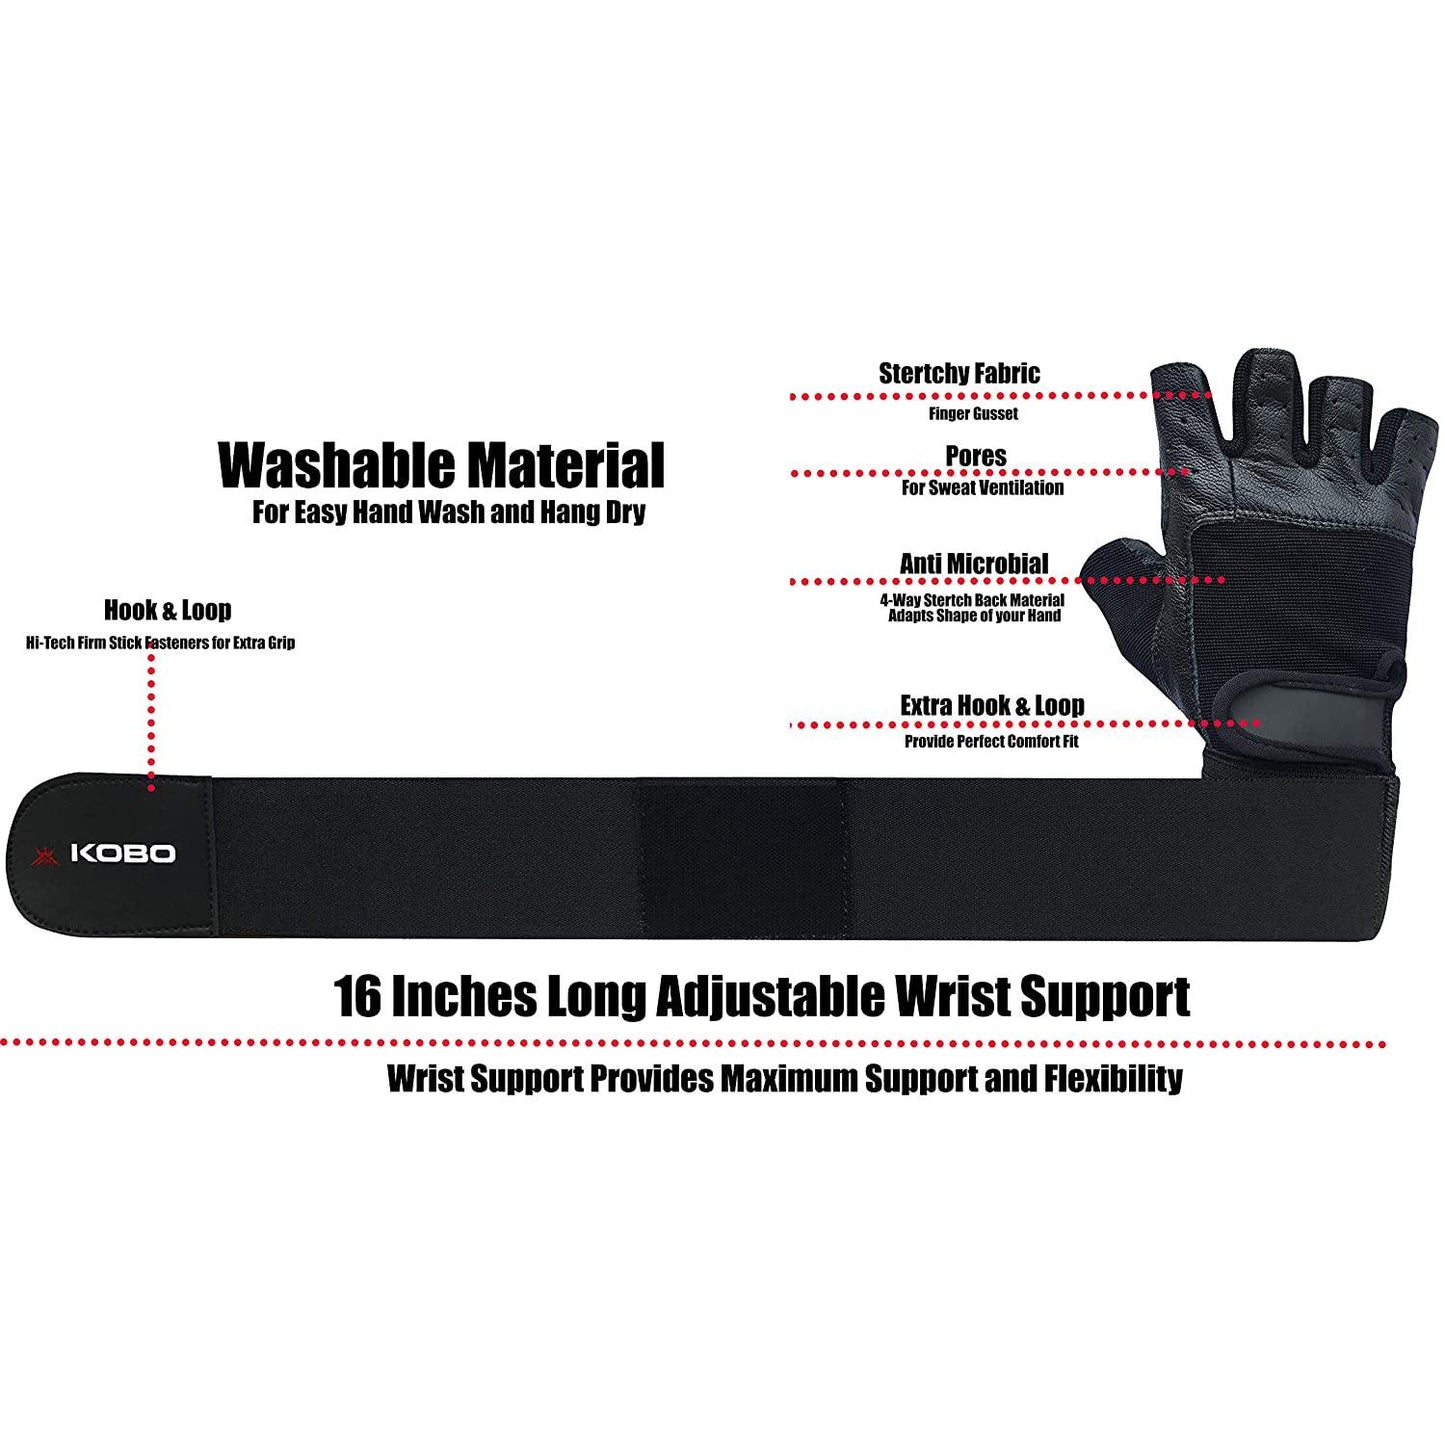 Leather Fitness Gloves/Weight Lifting Gloves/Gym Gloves Black - Best Price online Prokicksports.com